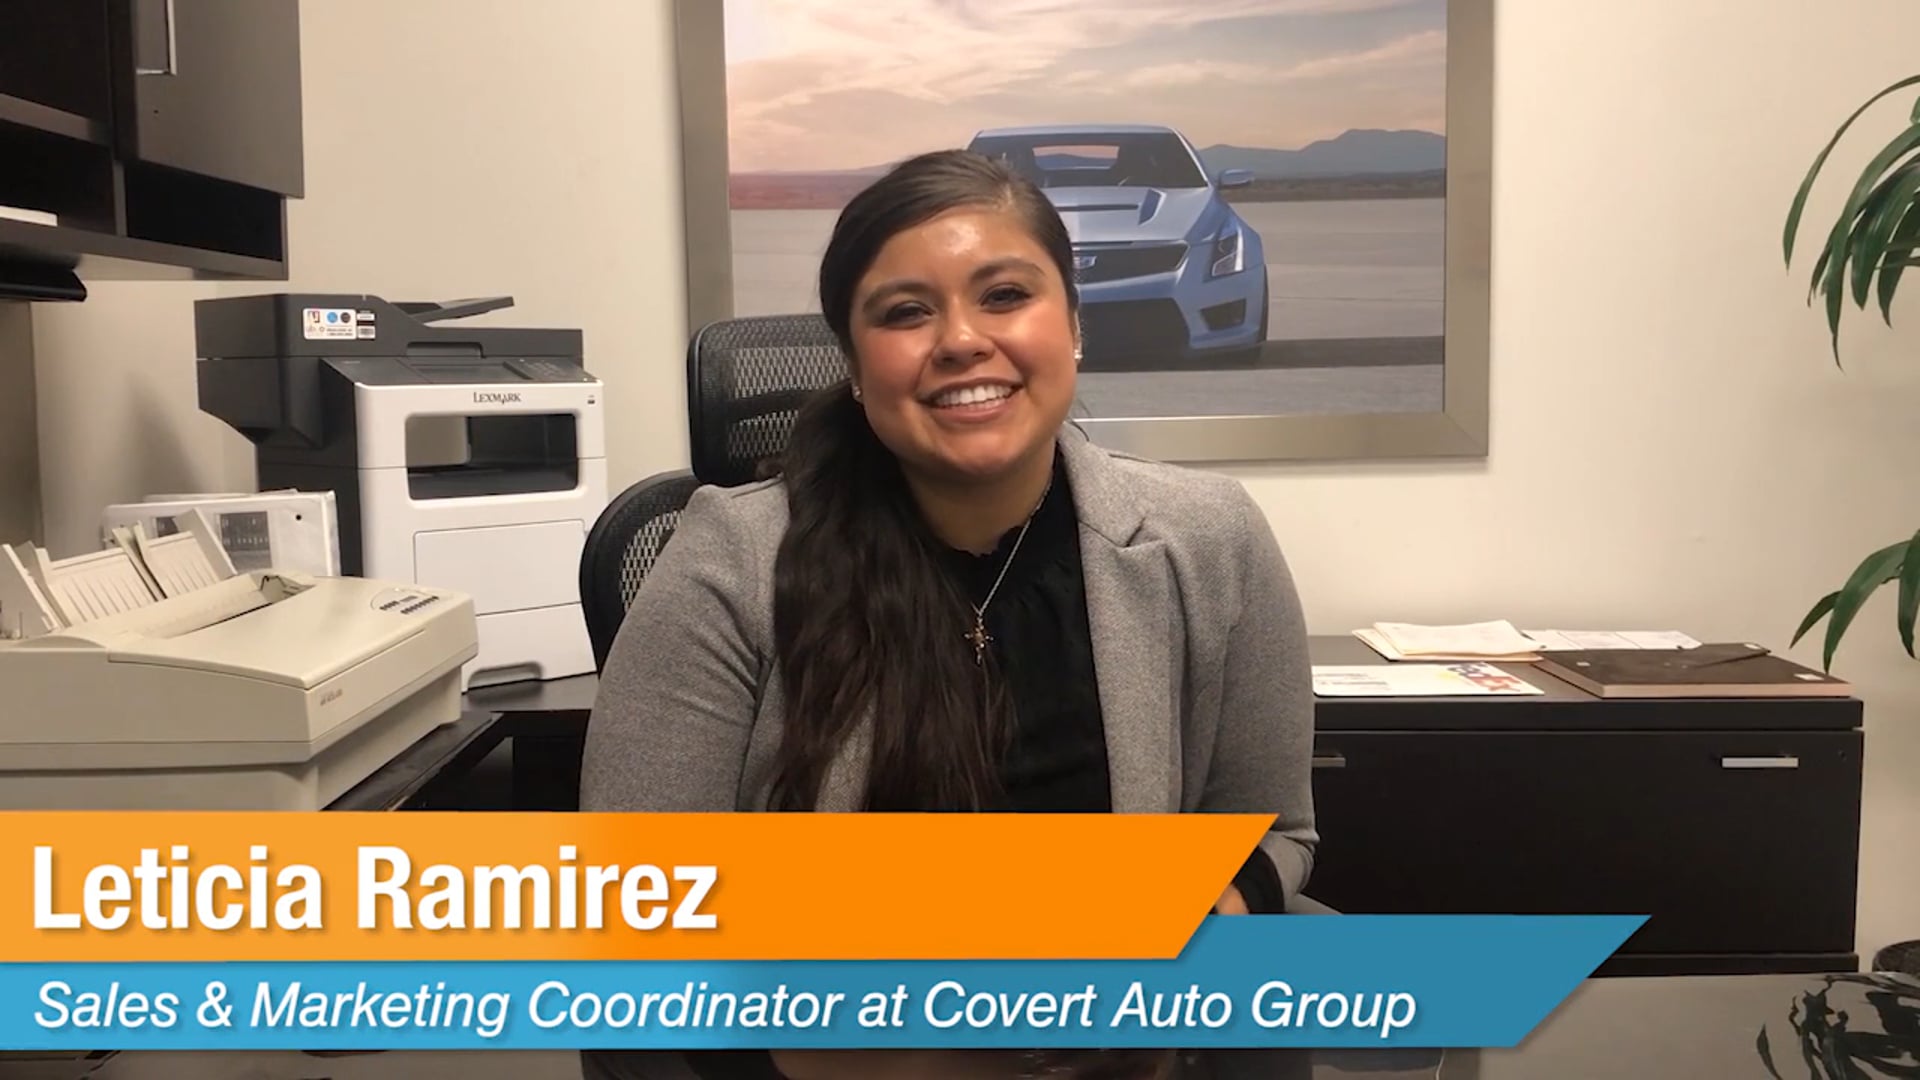 Success at Covert Auto Group - Leticia Ramirez